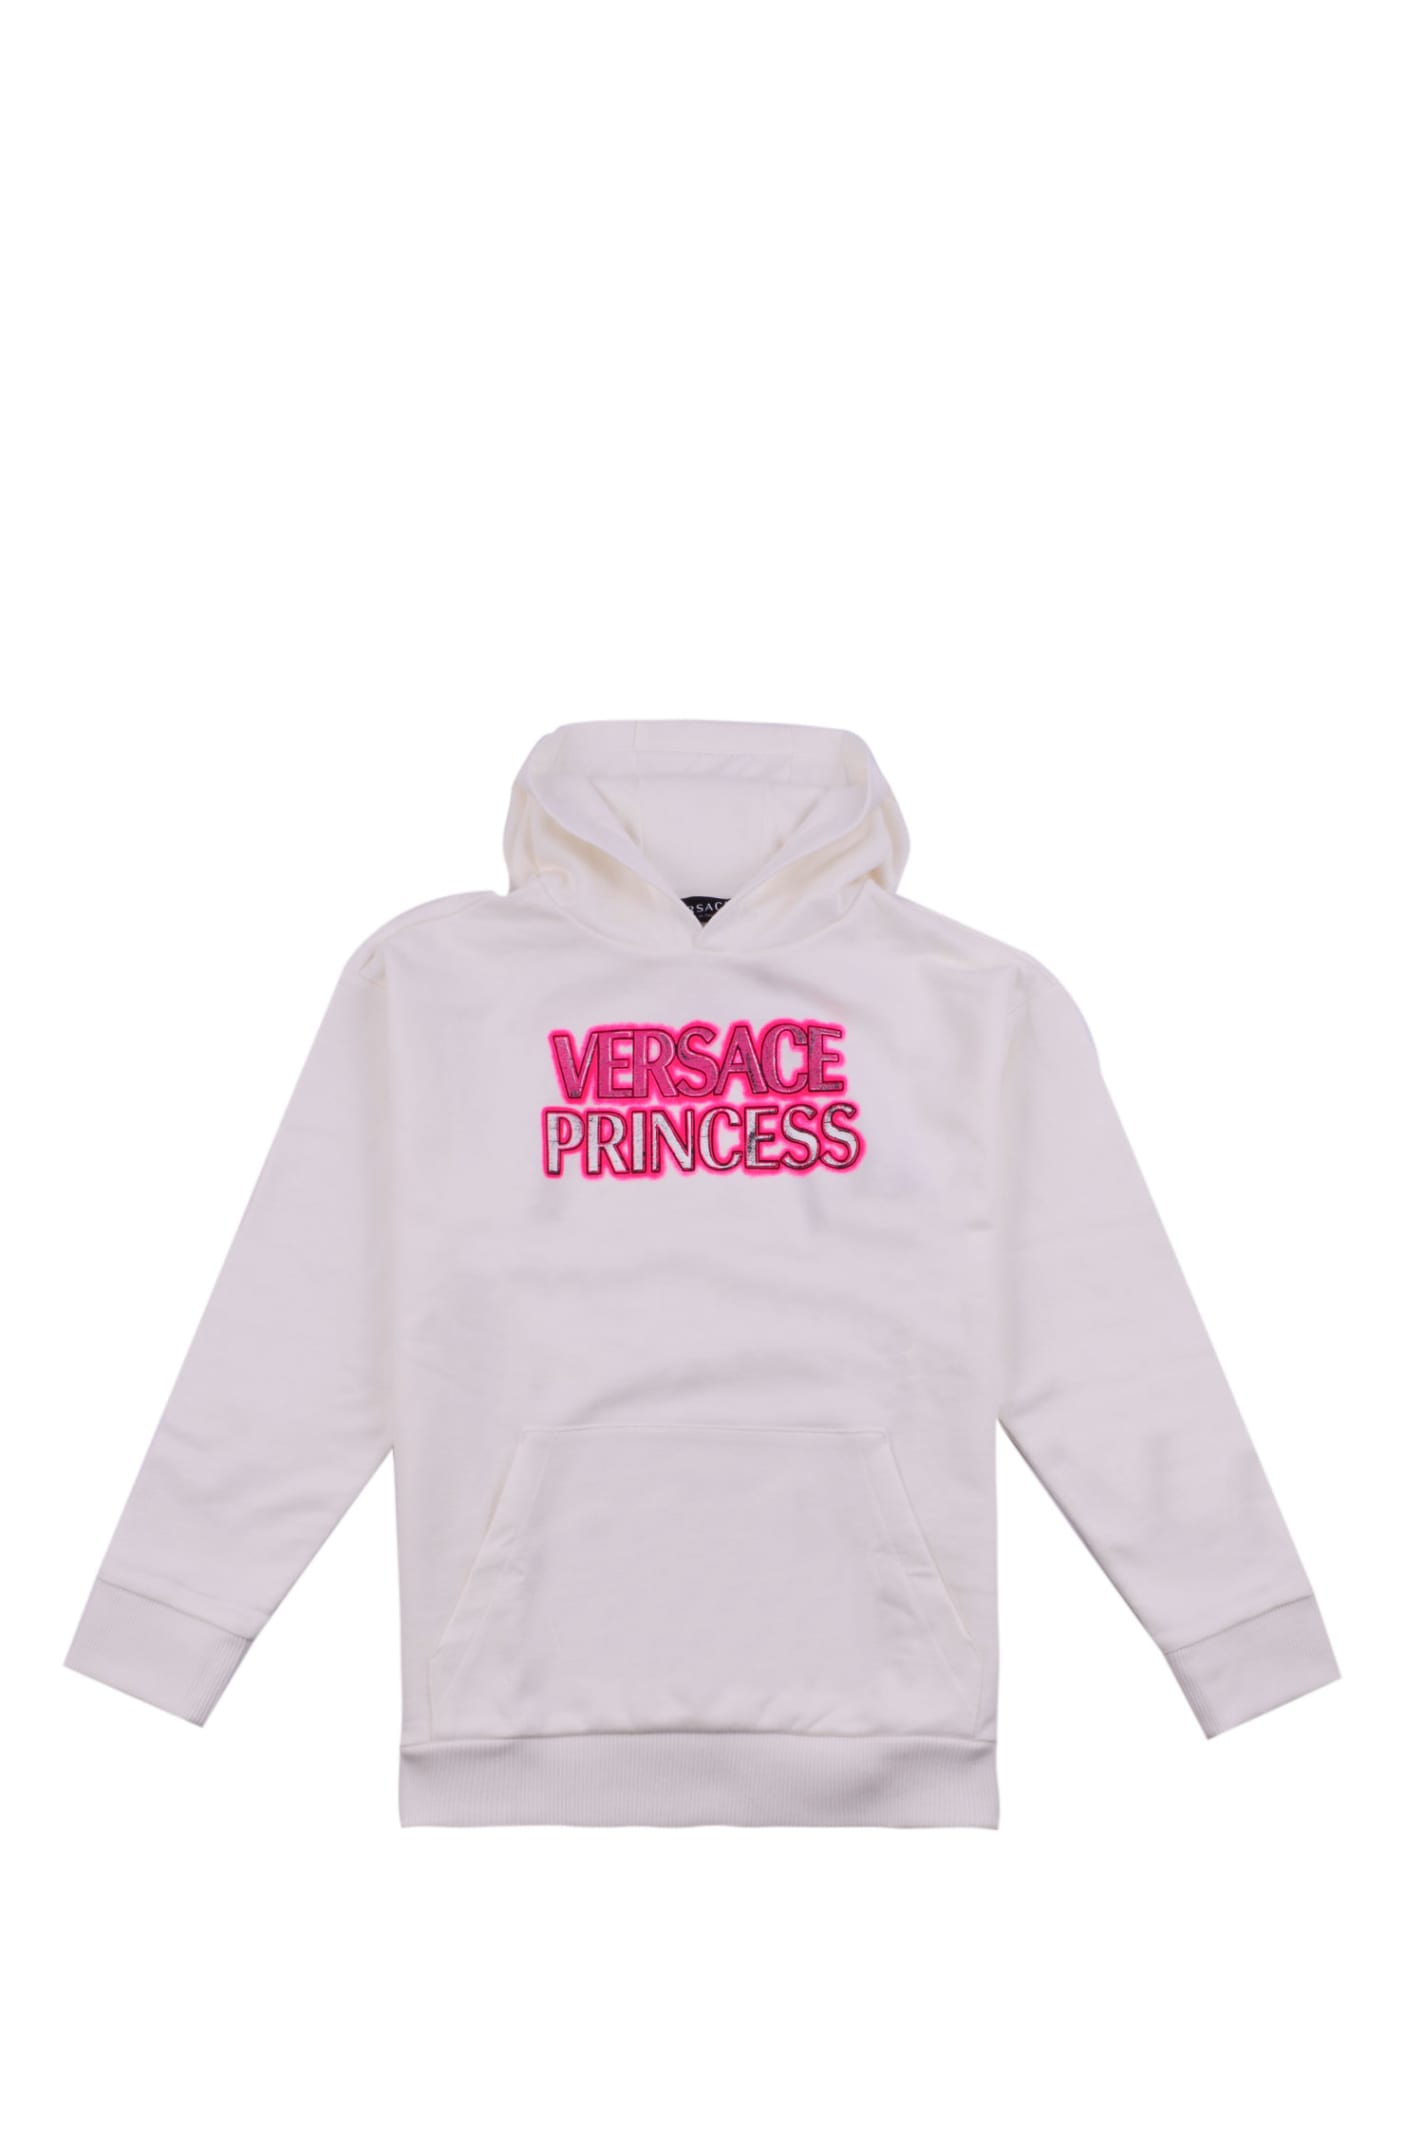 Versace Logo Kids princess Sweatshirt